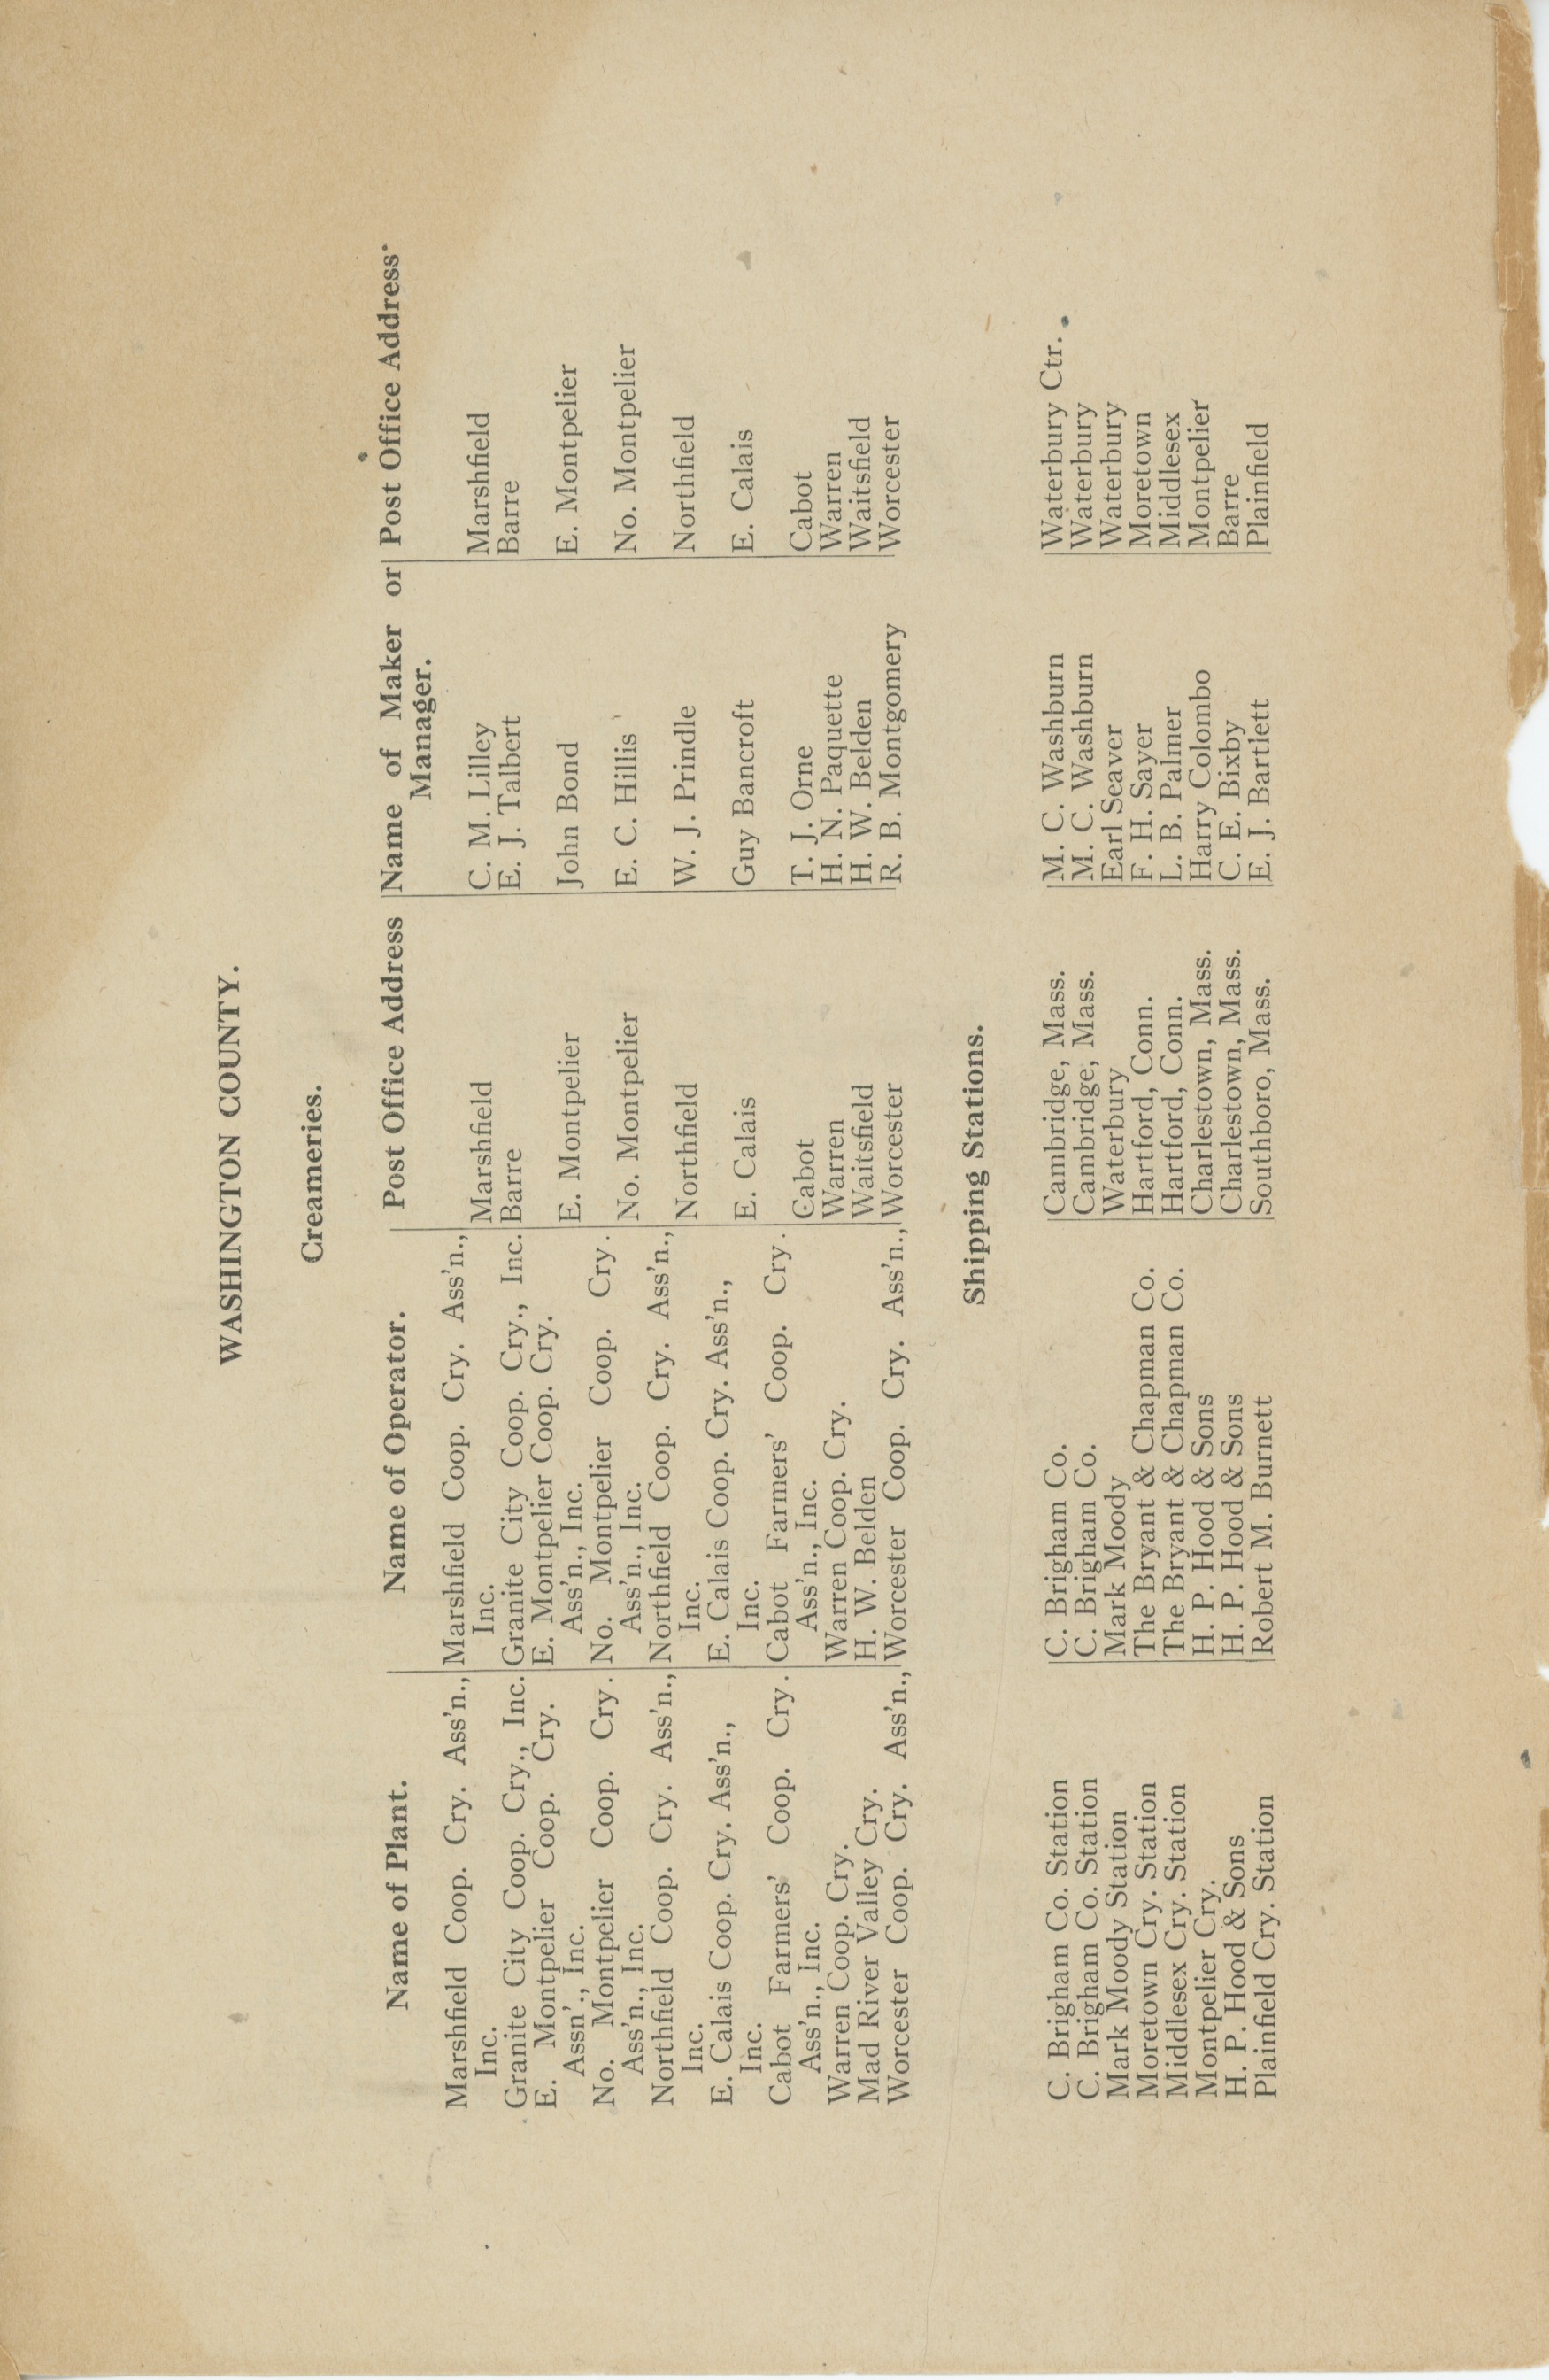 ced-1921-statedepartment-list of creameriespg9.jpeg